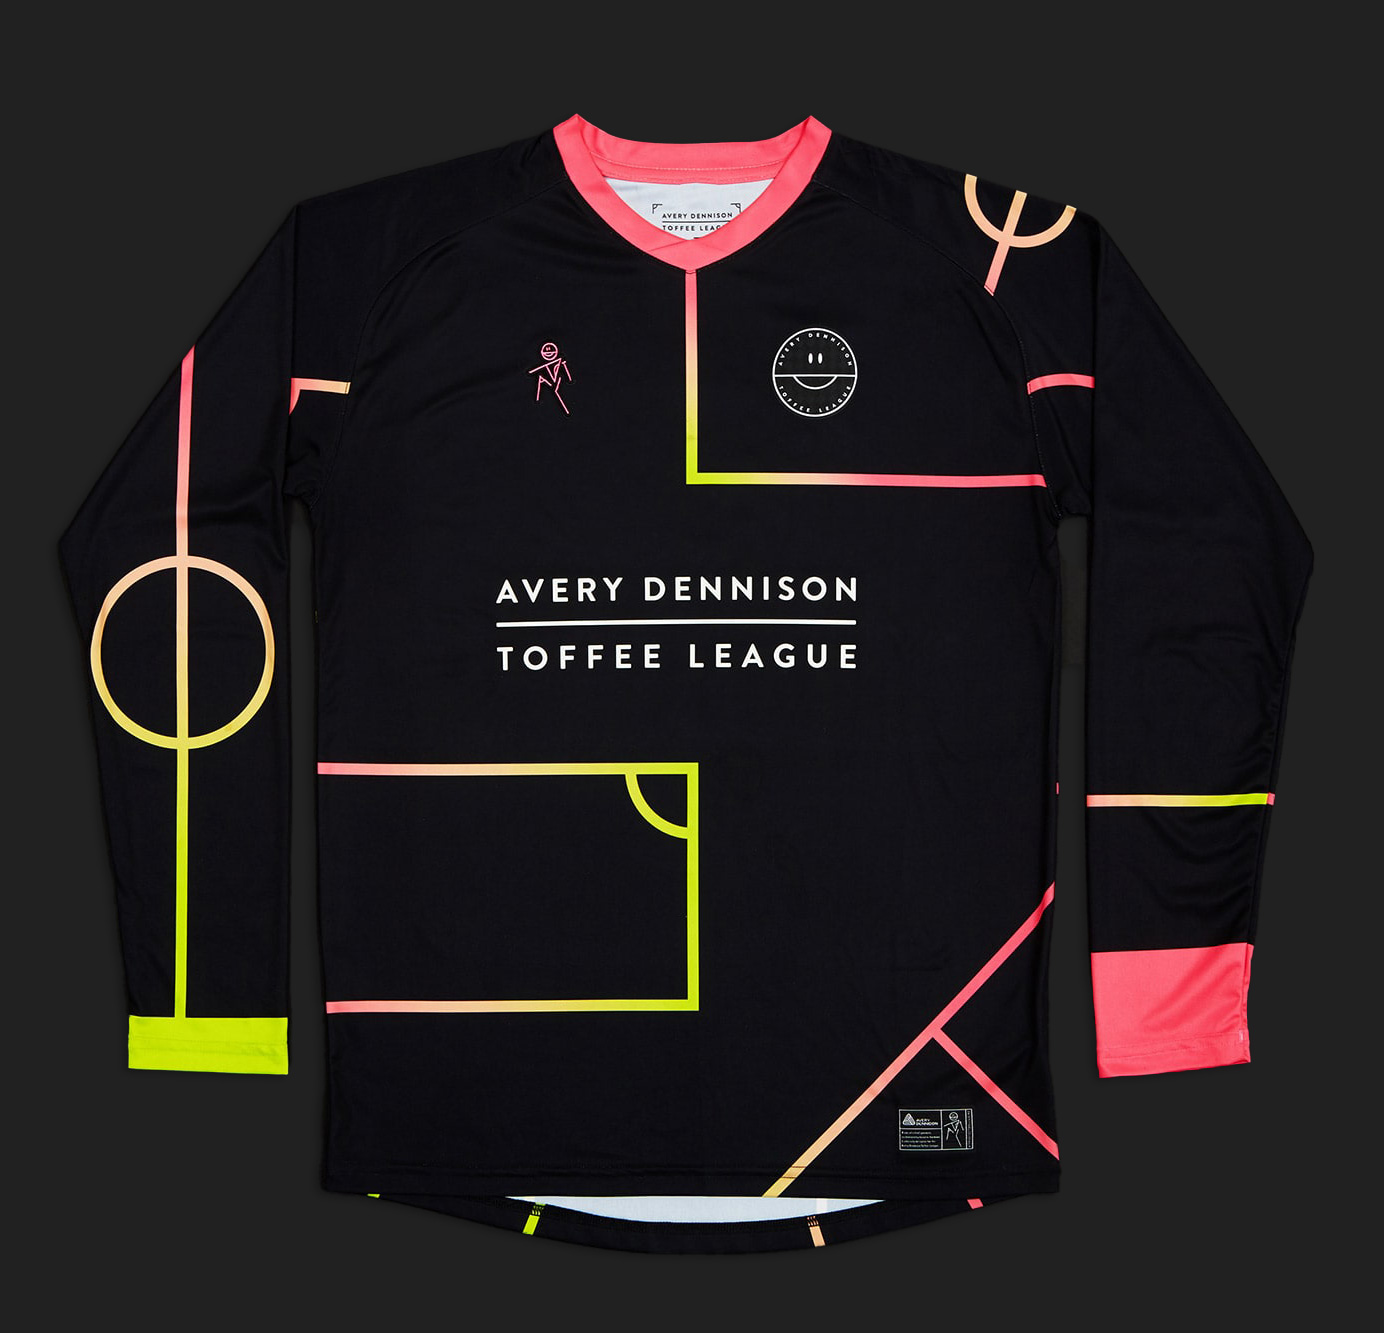 Avery Denison Toffee League – Football Kit